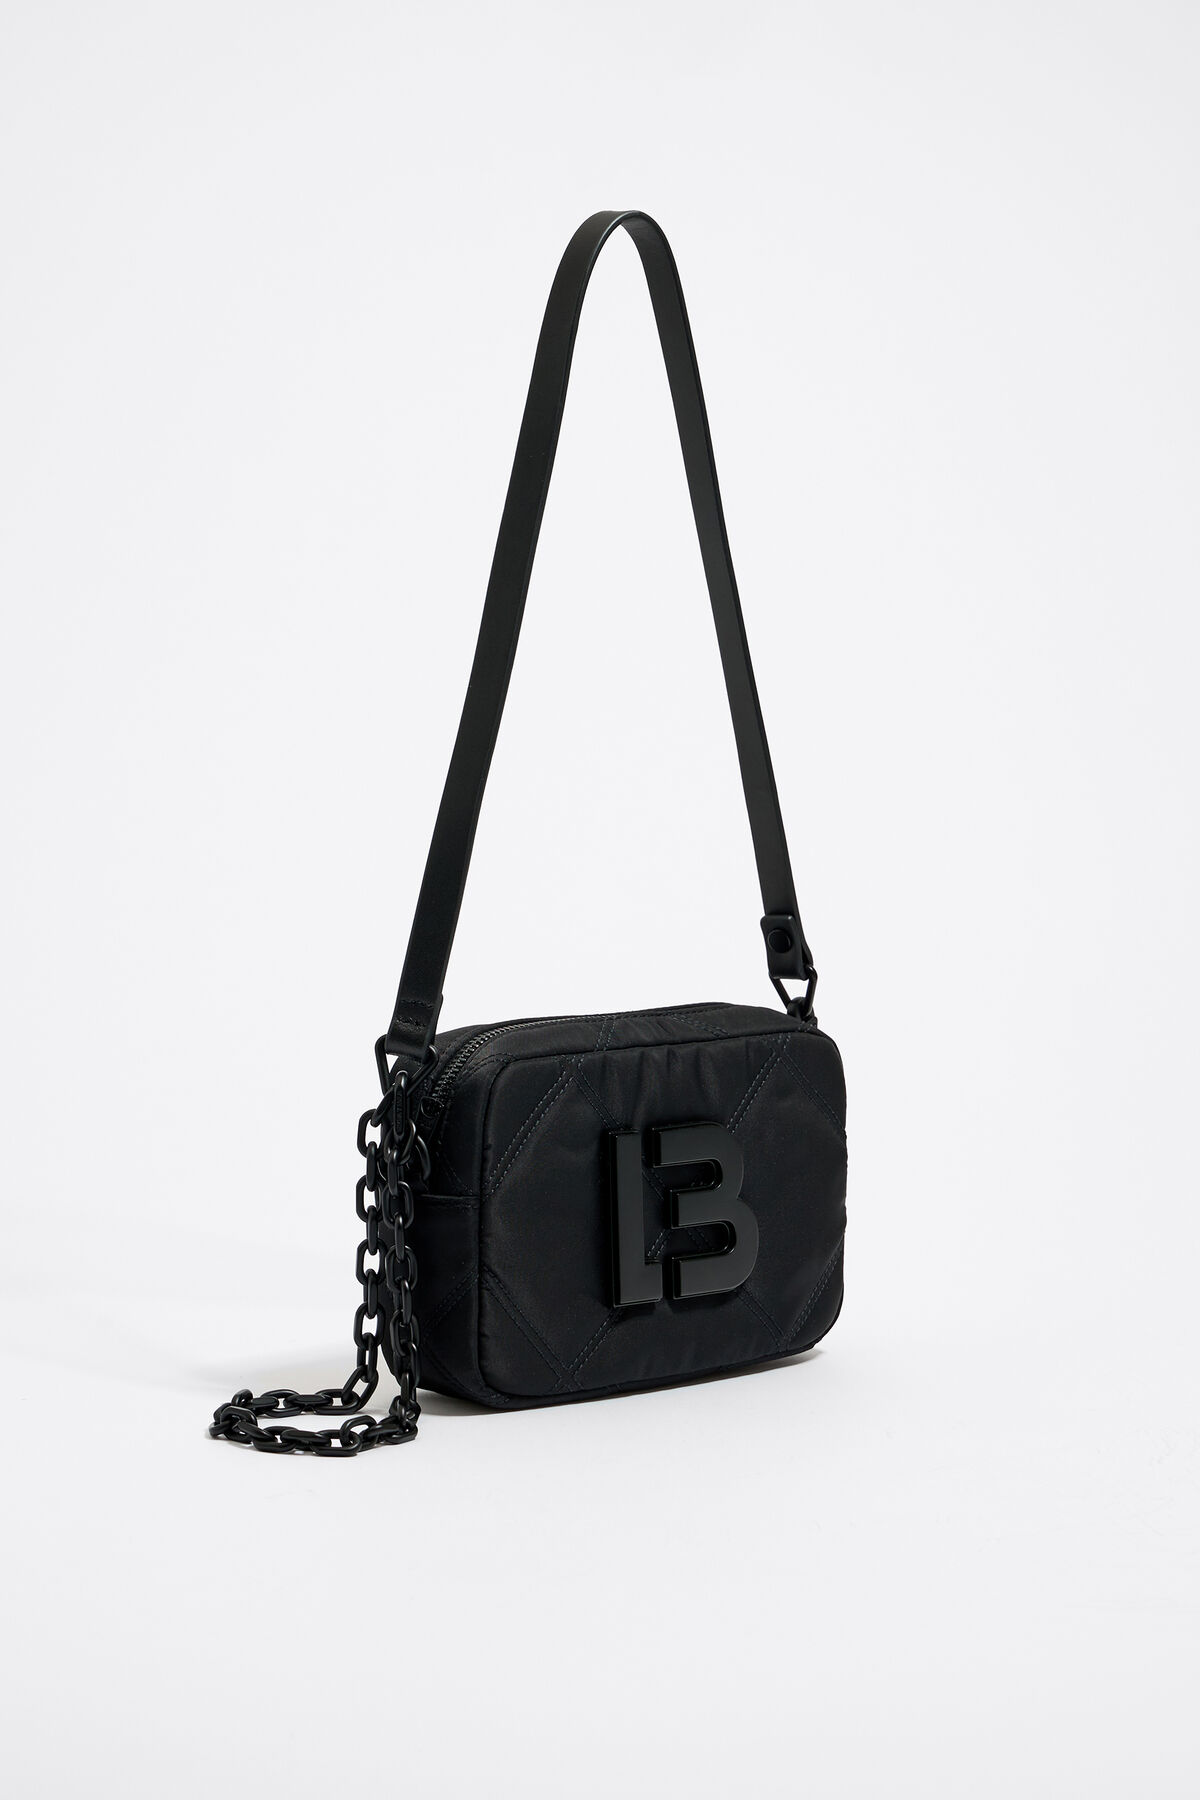 Bimba y Lola small Pelota shoulder bag, Black